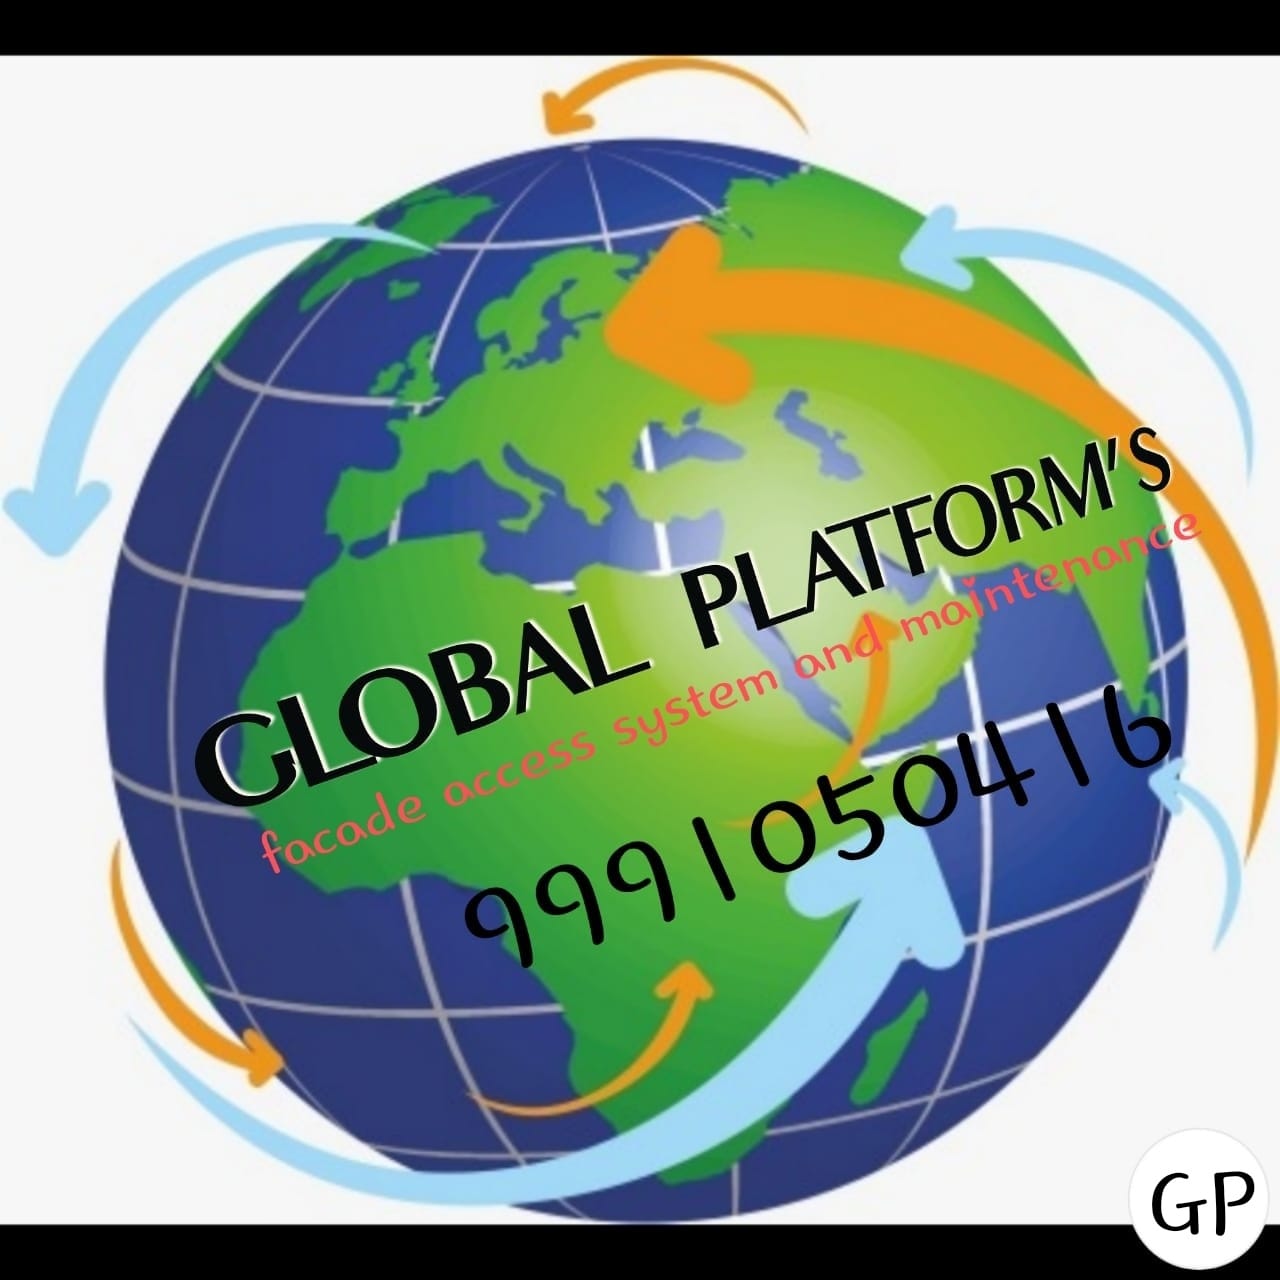 Global Platforms